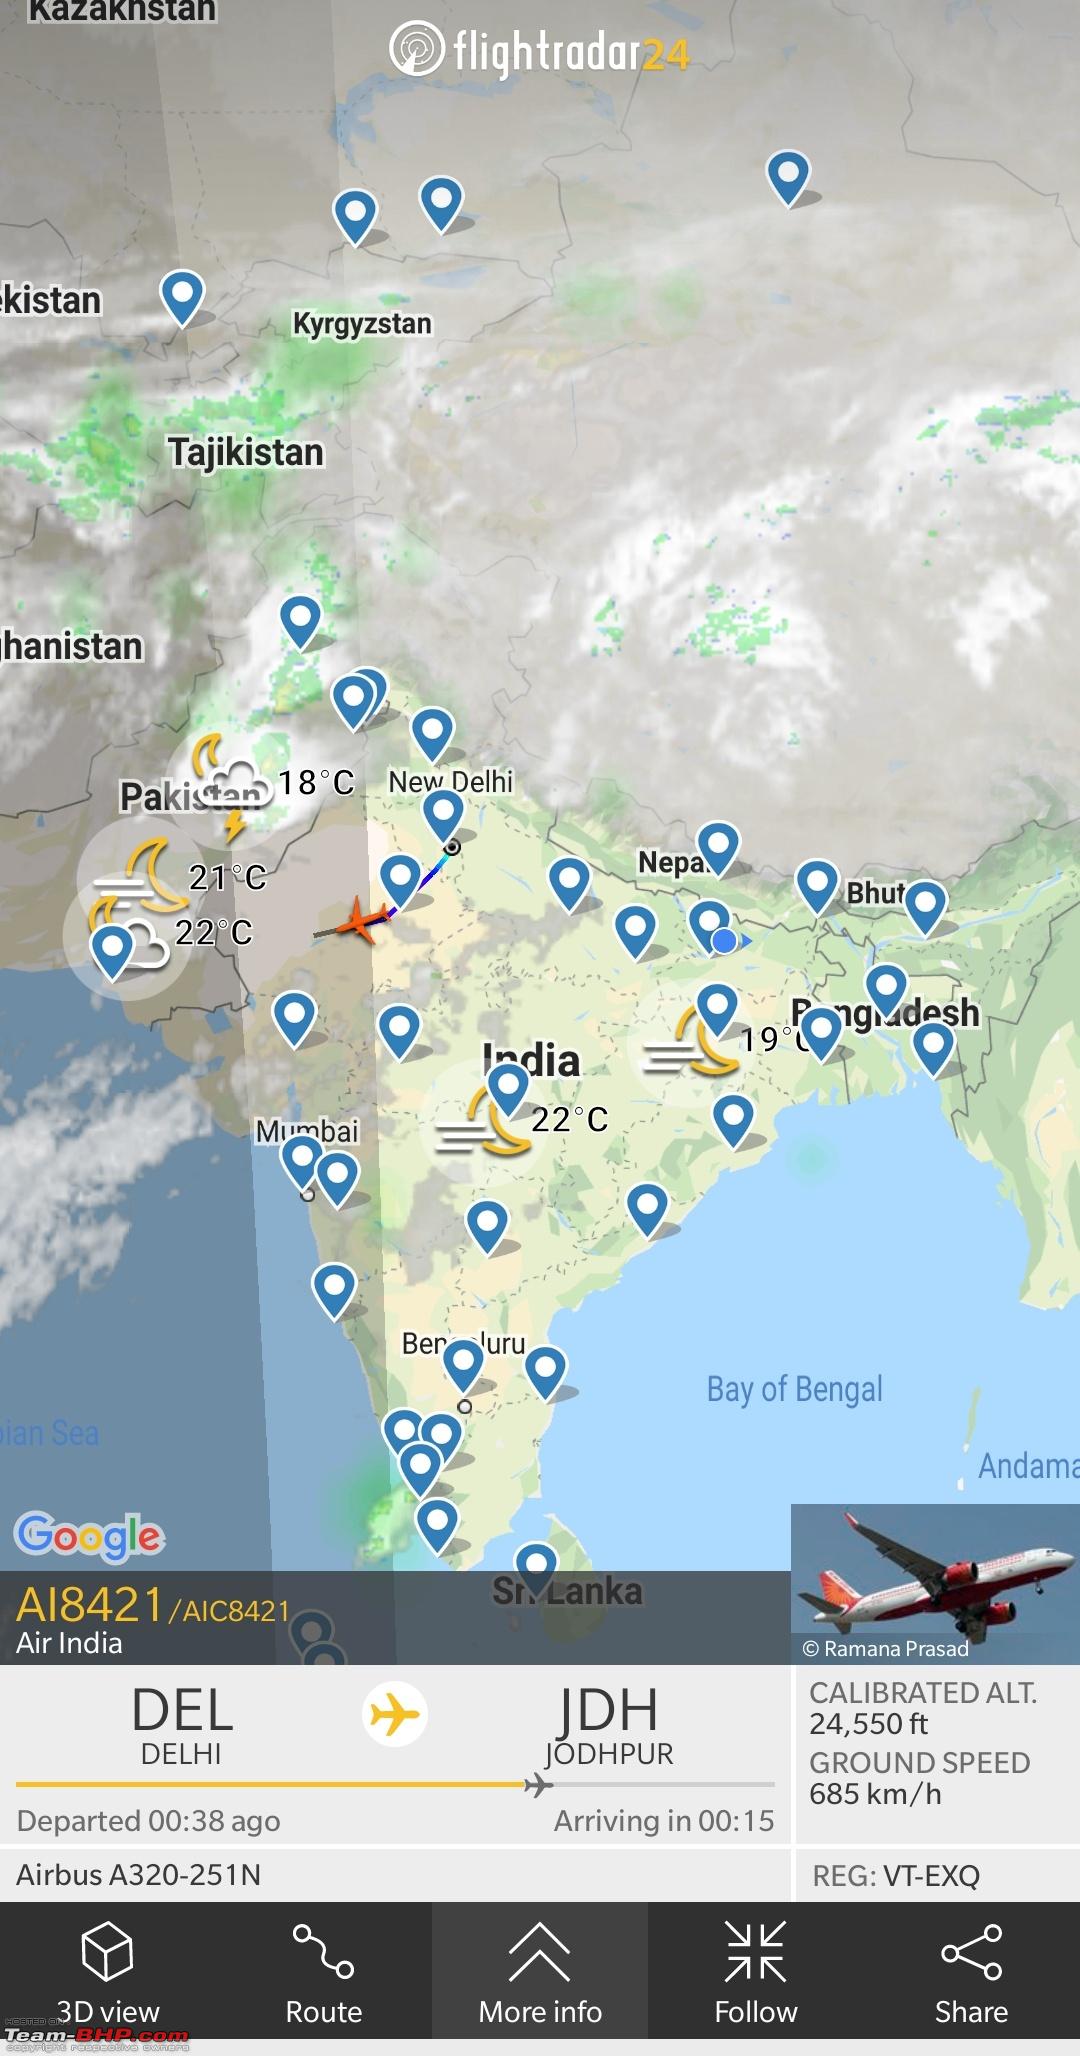 Team-BHP - FlightRadar24 - Live Flight Tracker. My experience as a host